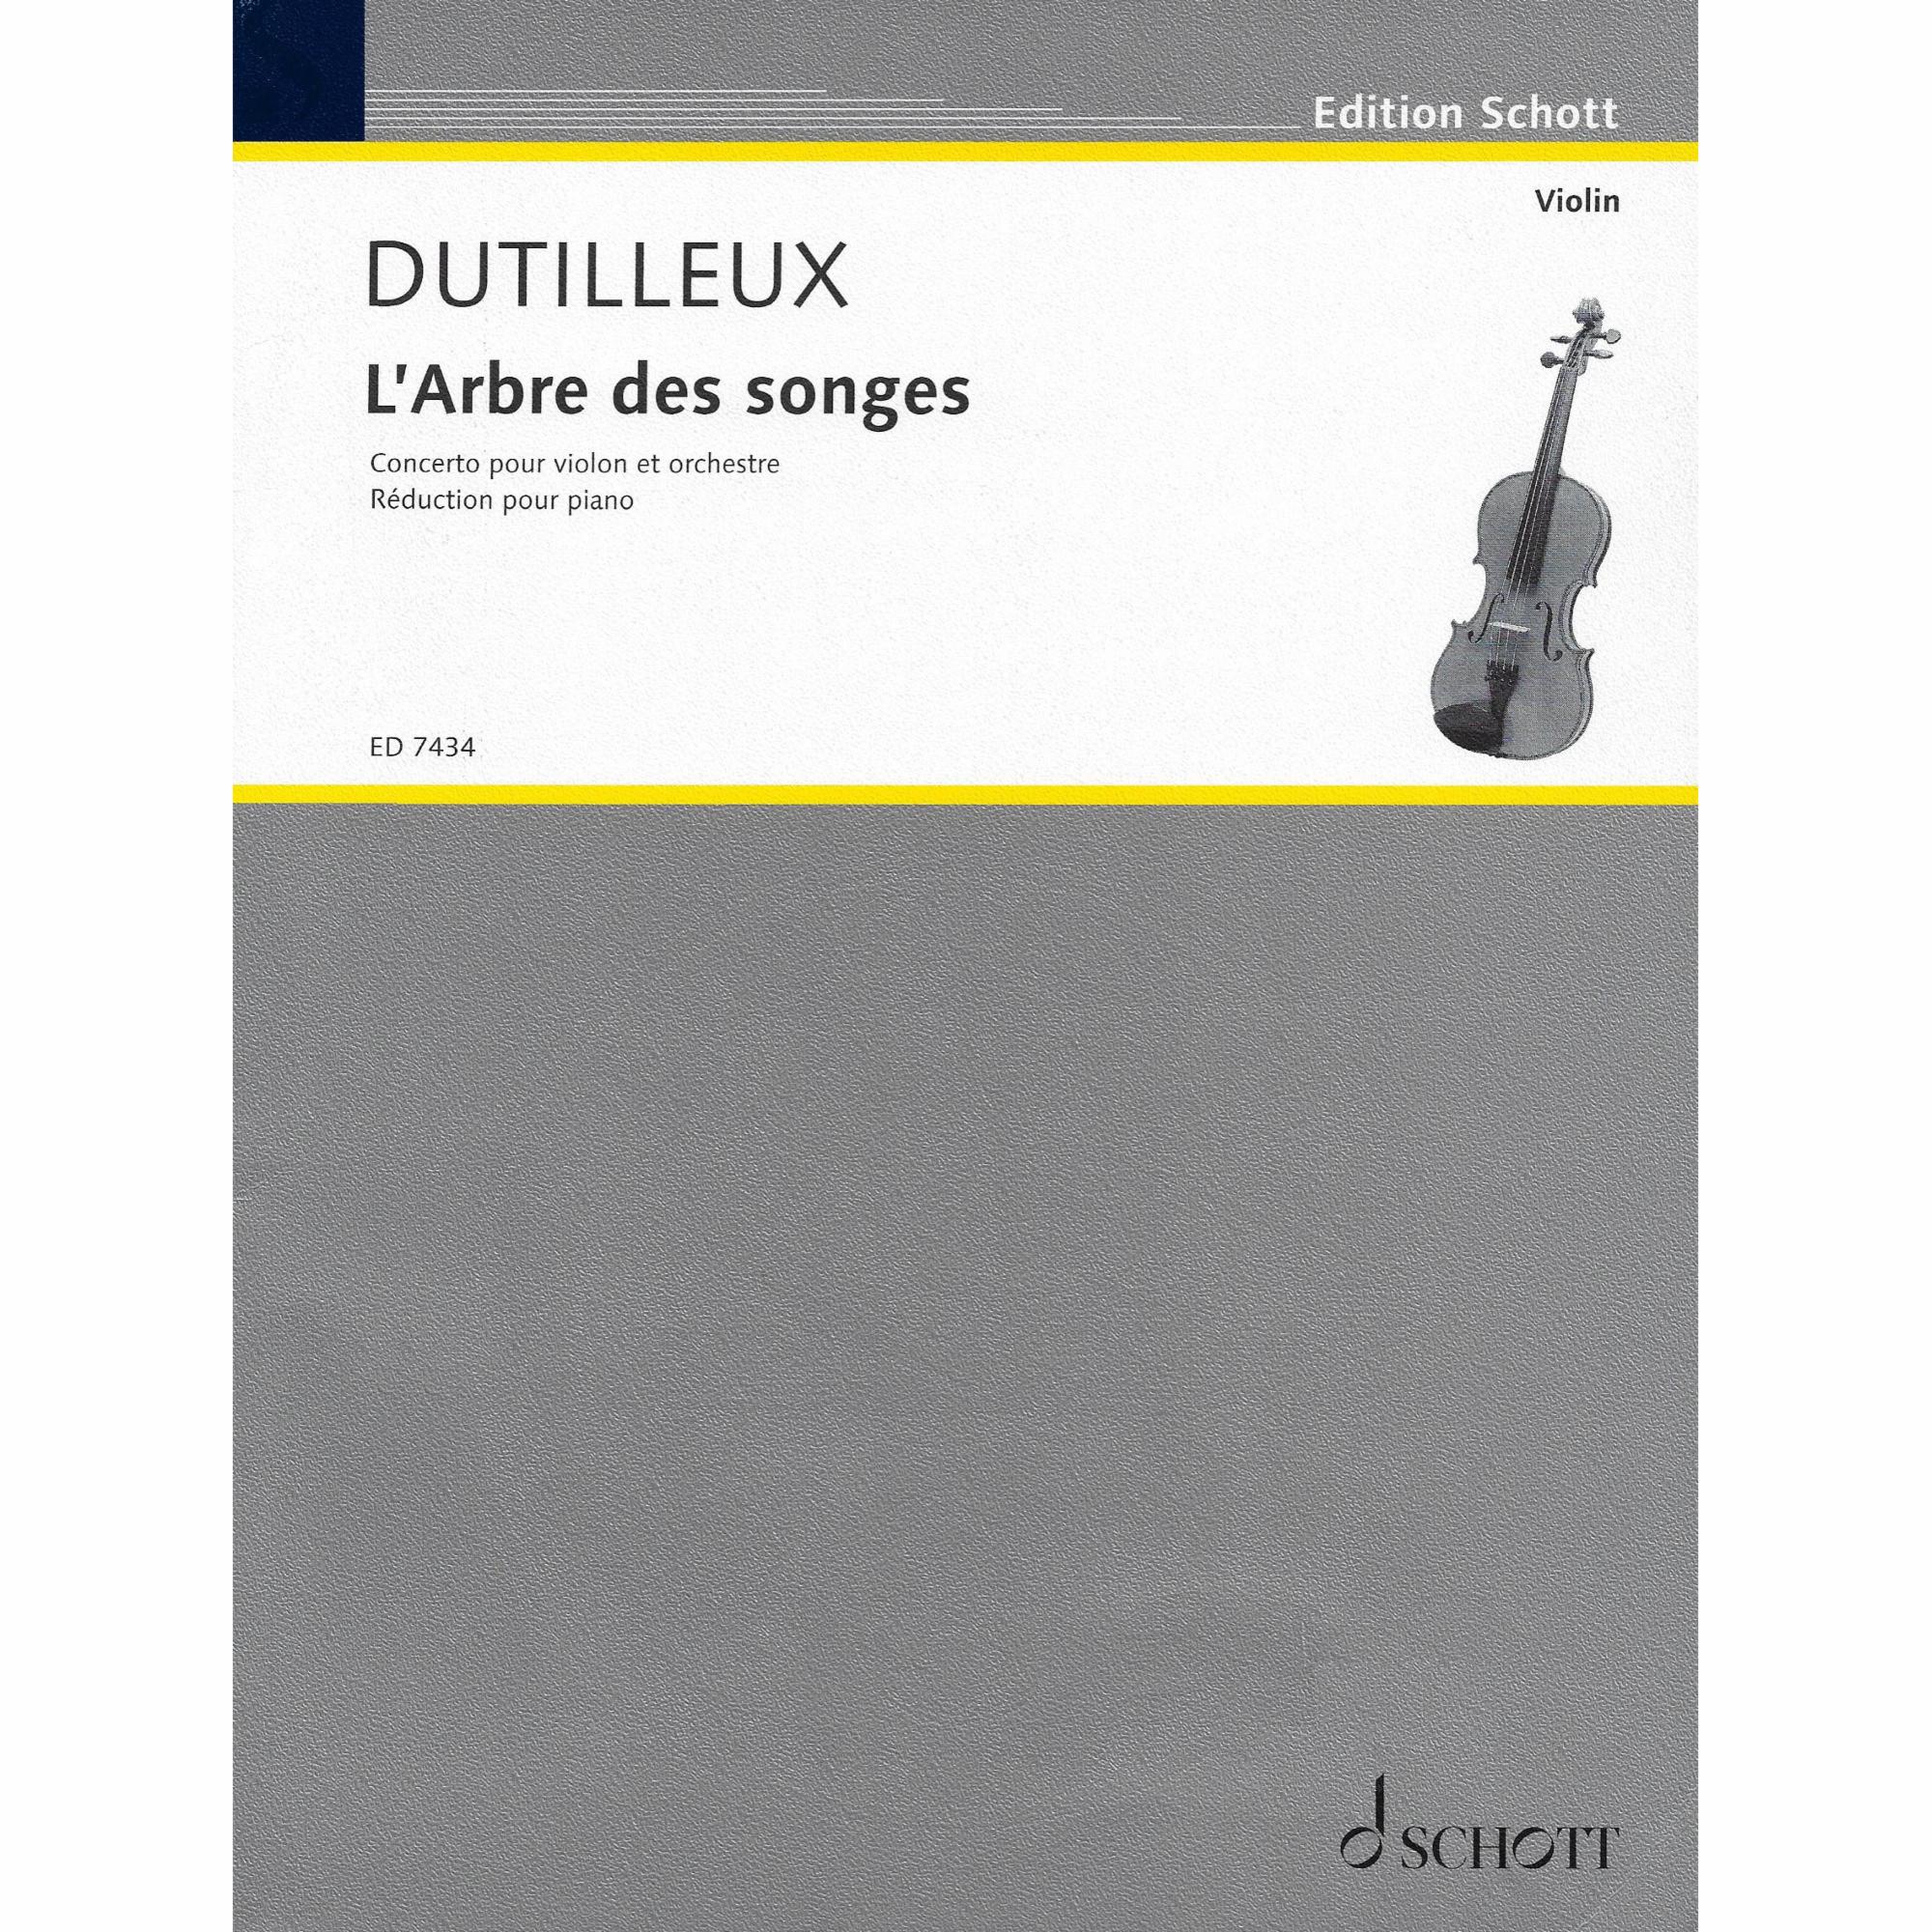 Dutilleux -- L'Arbre des songes for Violin and Piano